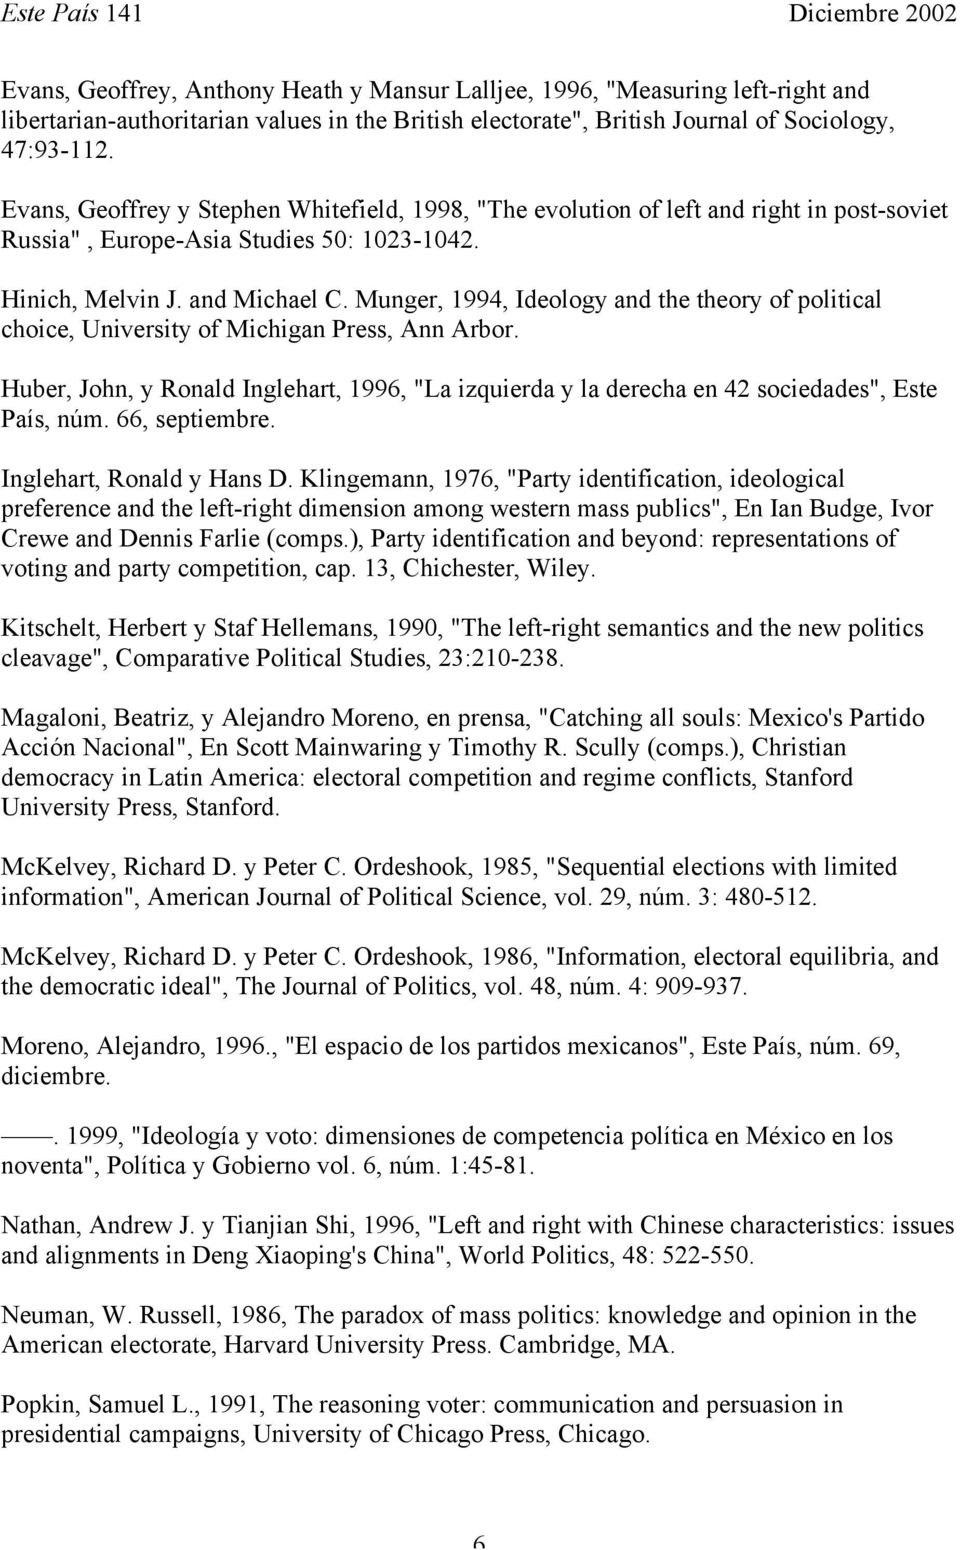 Munger, 1994, Ideology and the theory of political choice, University of Michigan Press, Ann Arbor. Huber, John, y Ronald Inglehart, 1996, "La izquierda y la derecha en 42 sociedades", Este País, núm.